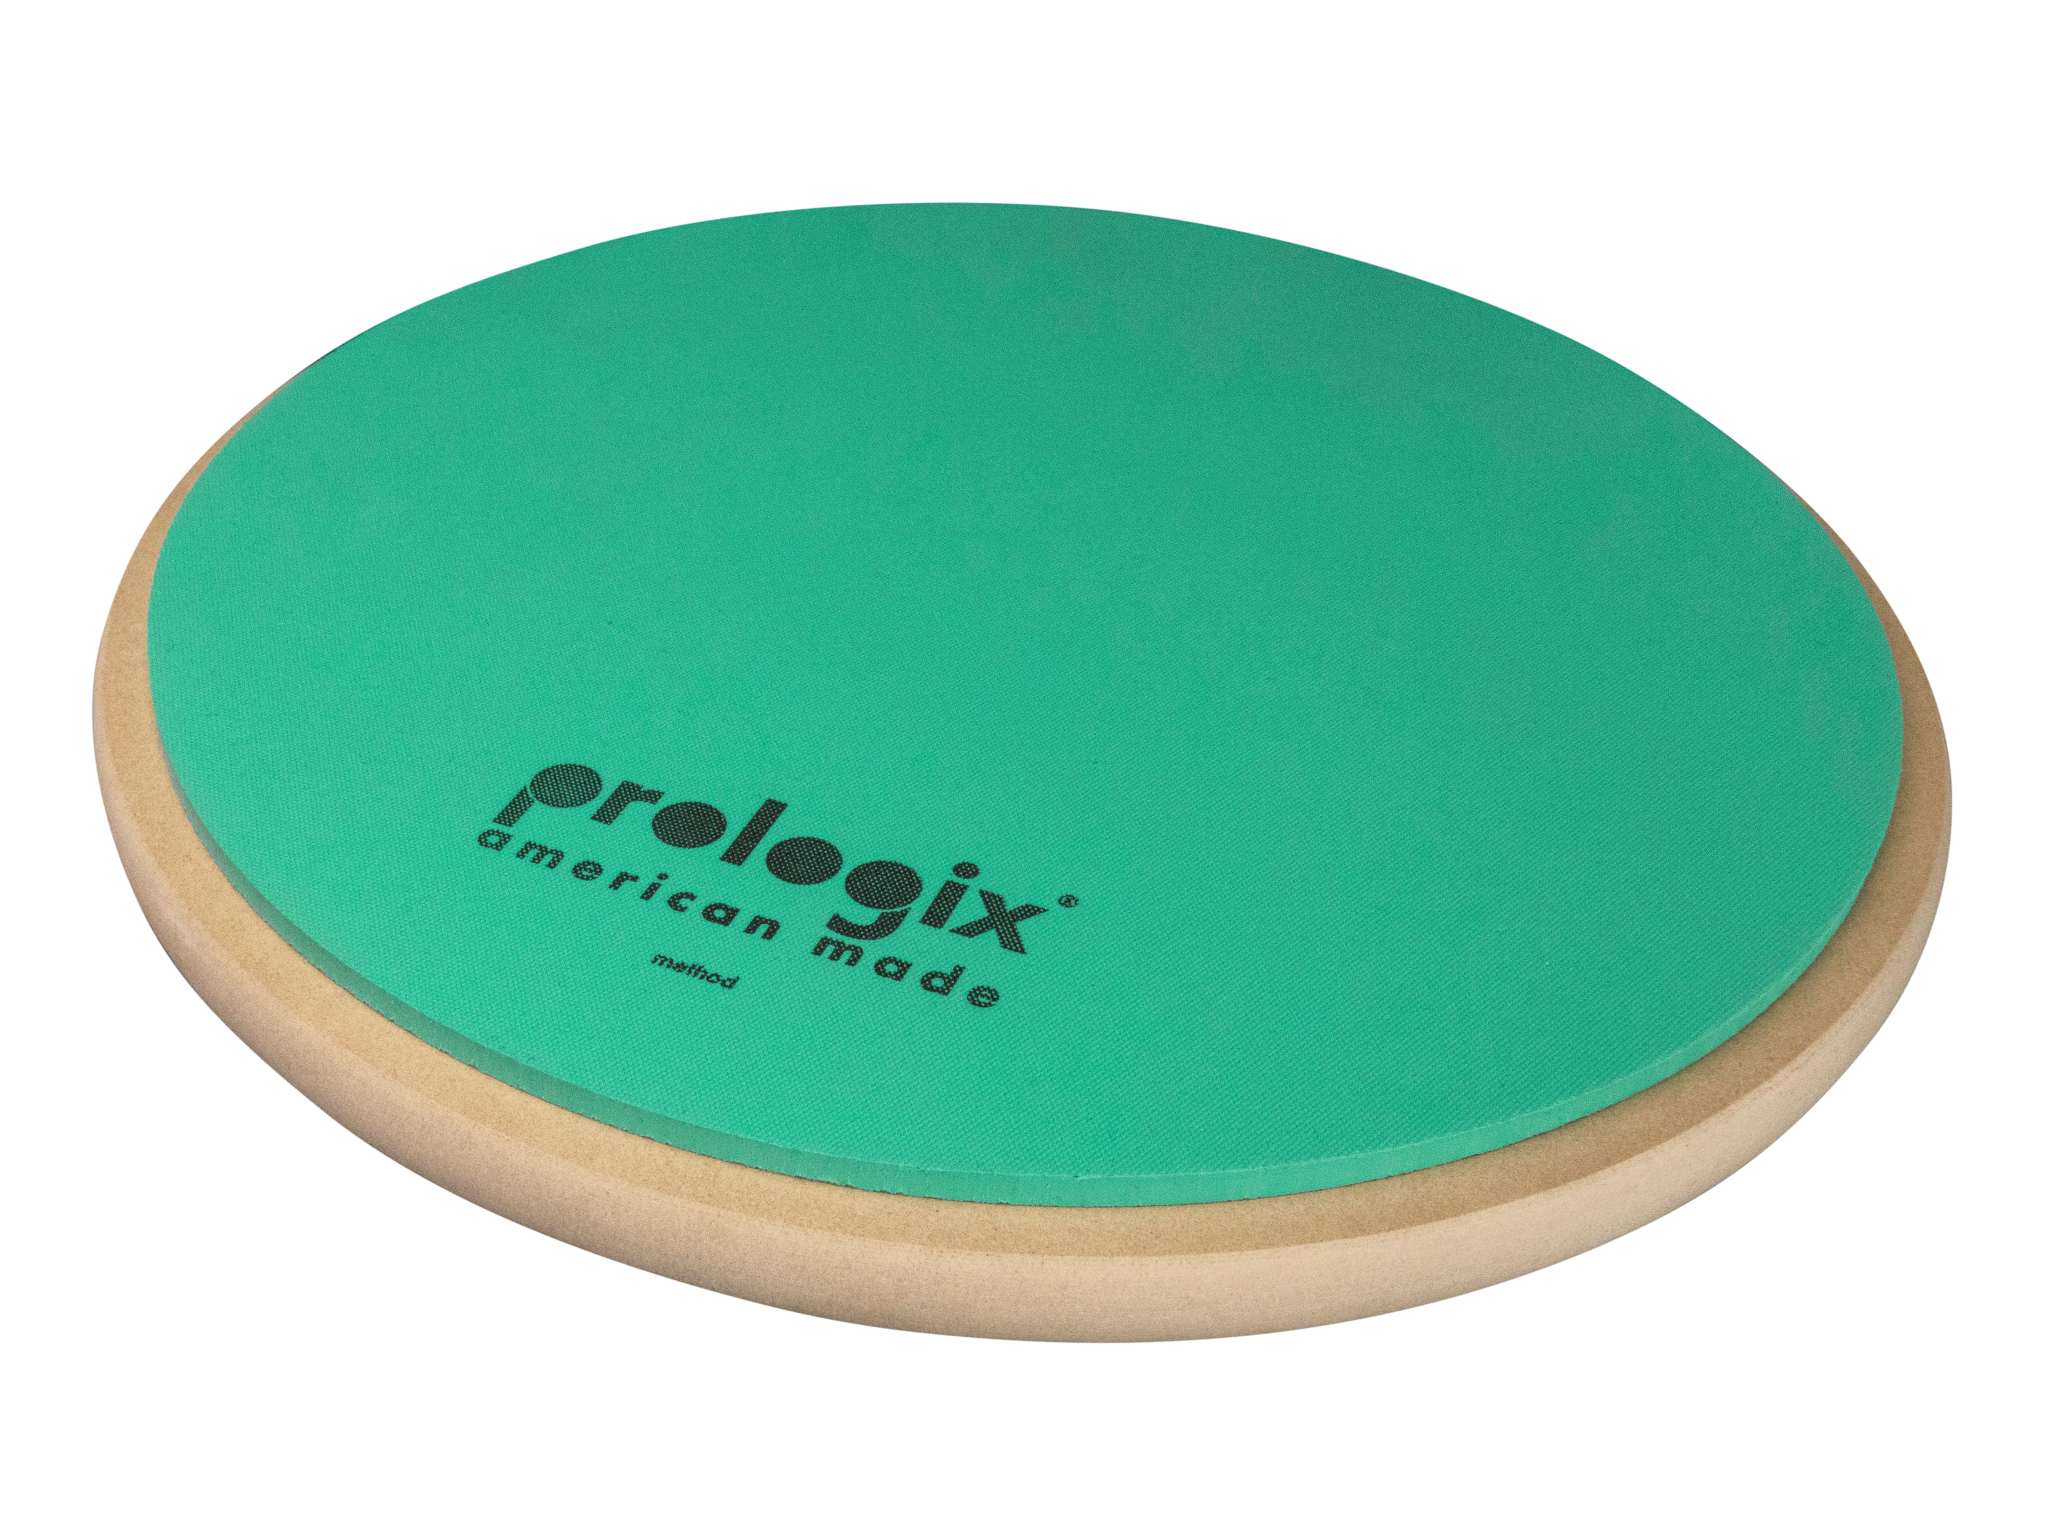 Prologix | Practikit - (4) SMC Drum Set Practice Pads